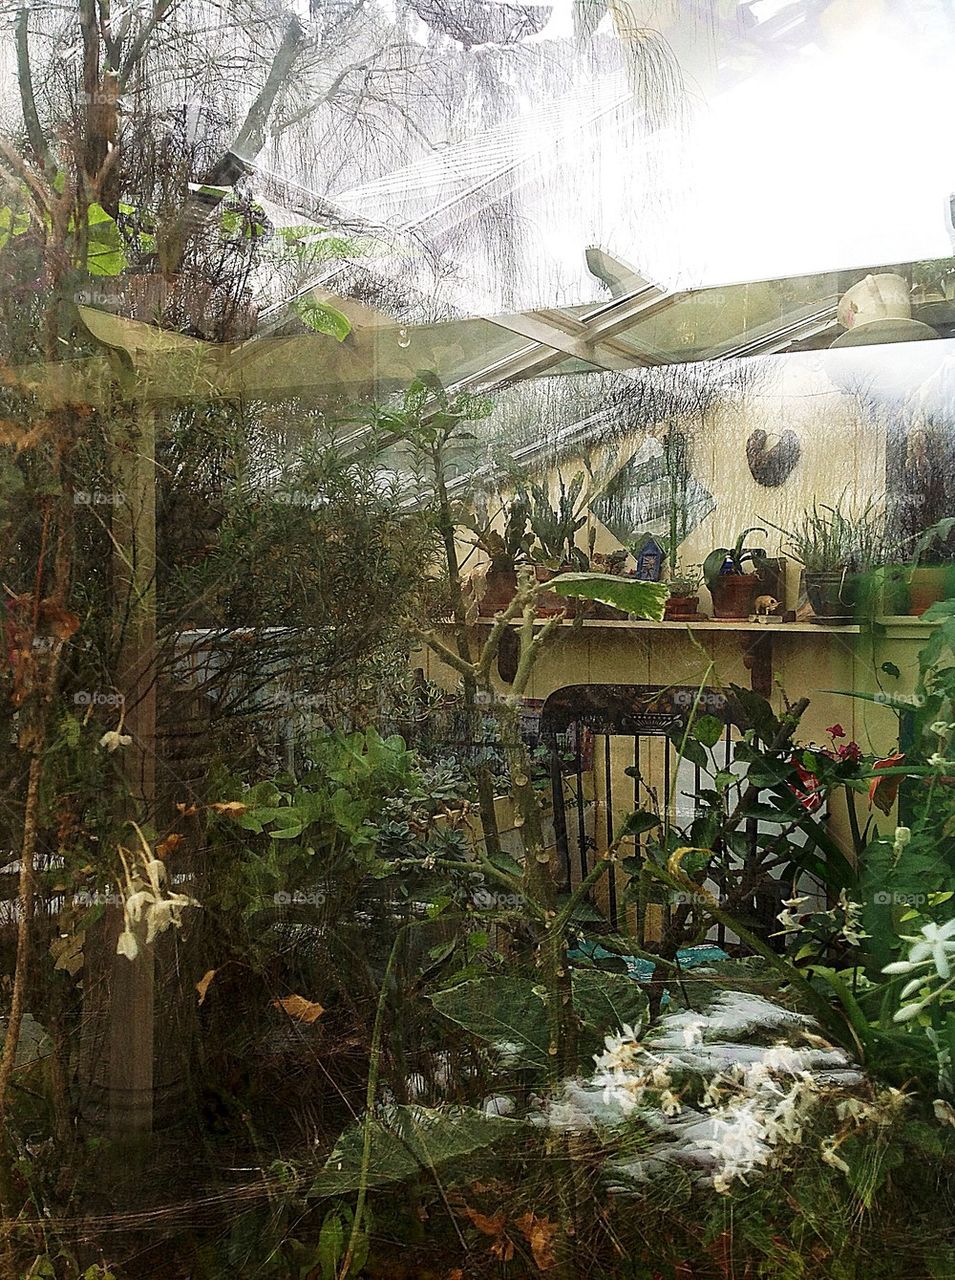 Greenhouse reflection